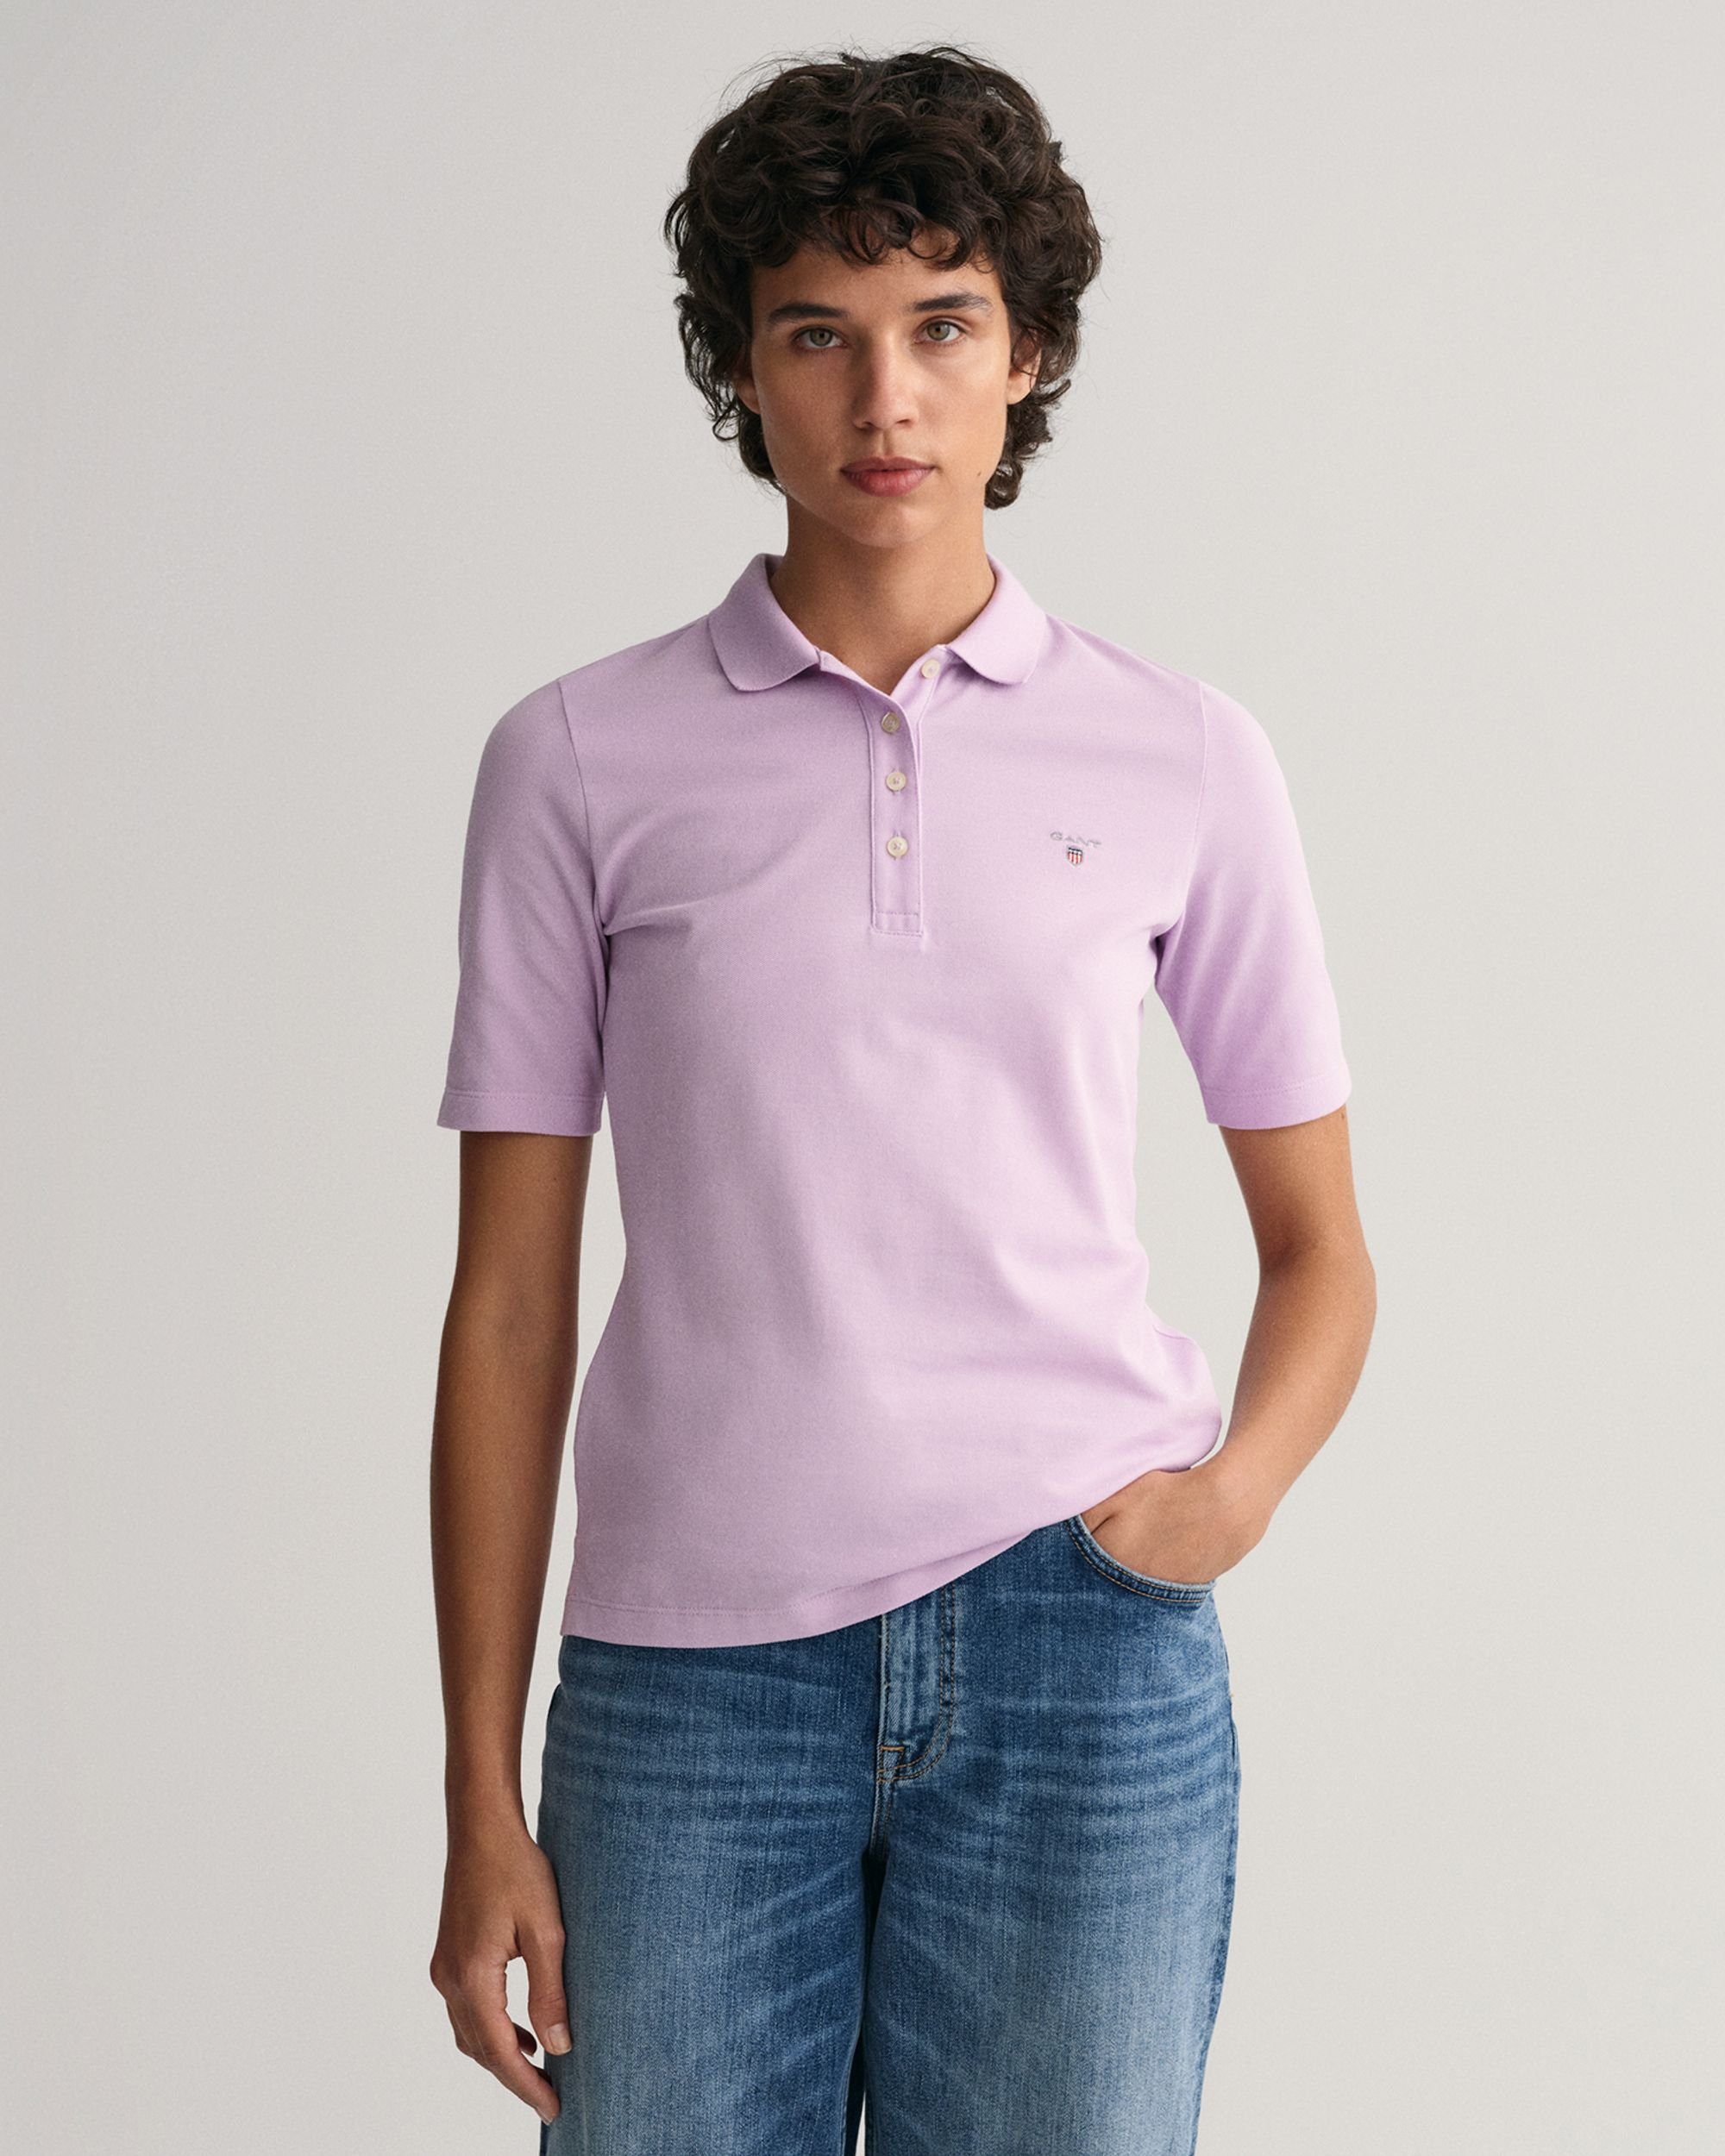 Gant Businessshirt Piqué Poloshirt mit längerem lilac soothing Arm Original